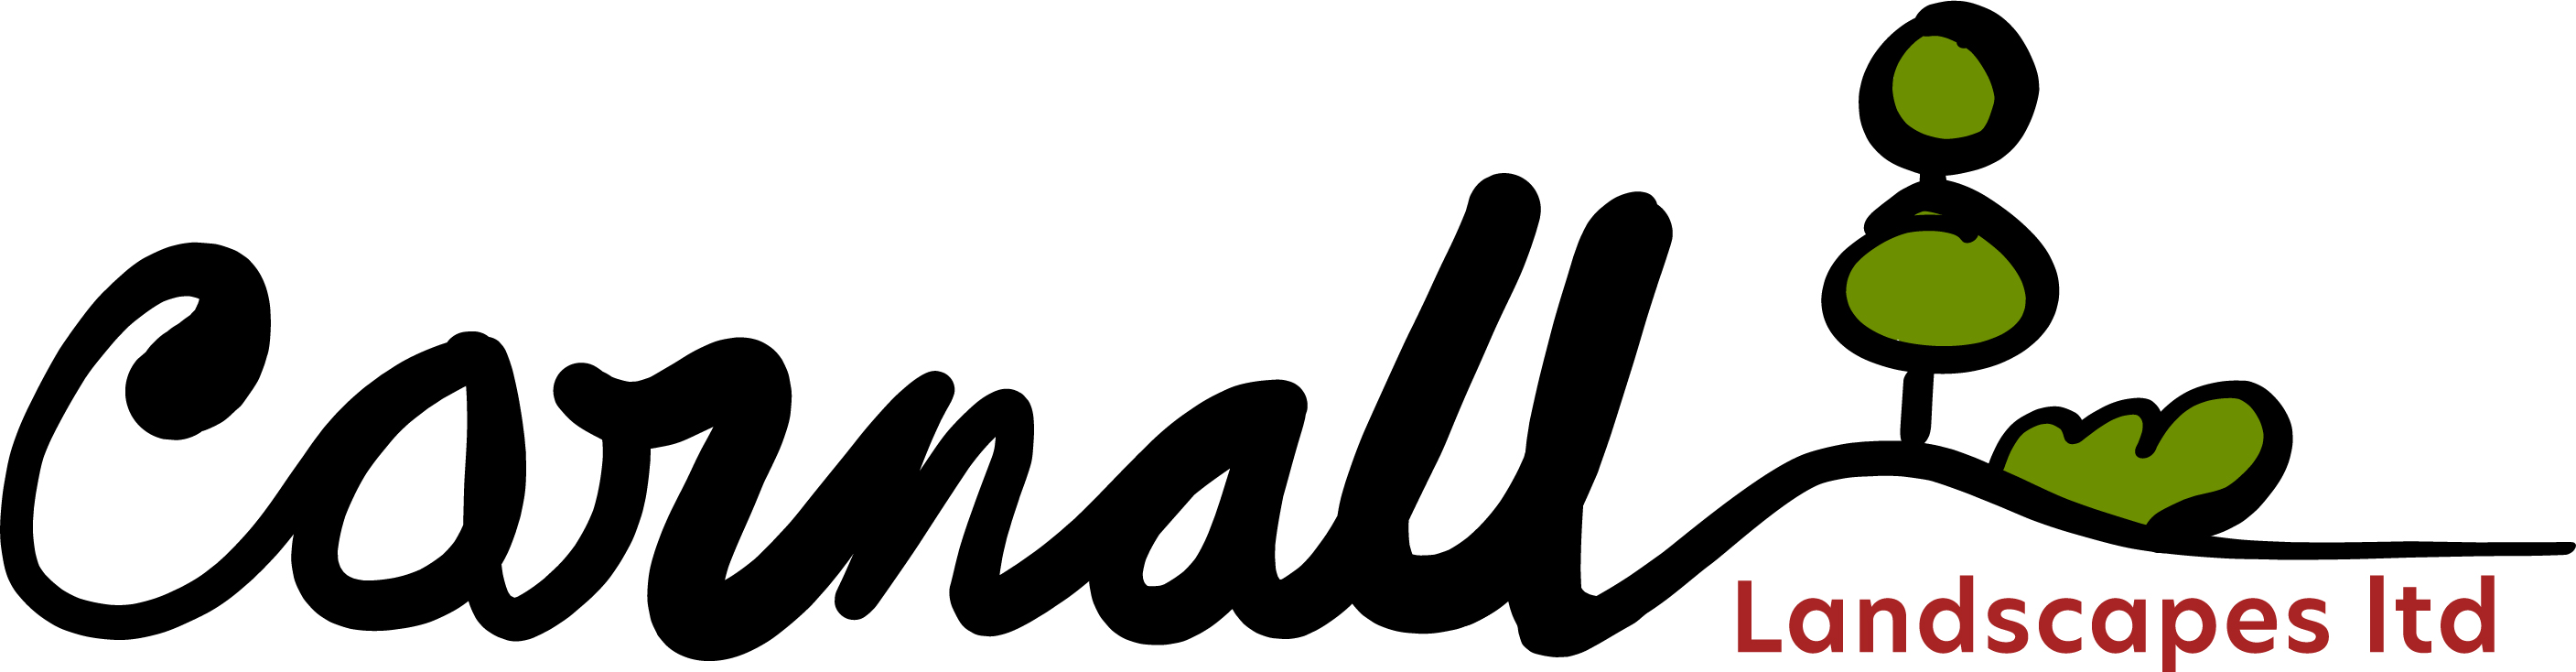 logo for Carnall Landscapes Ltd